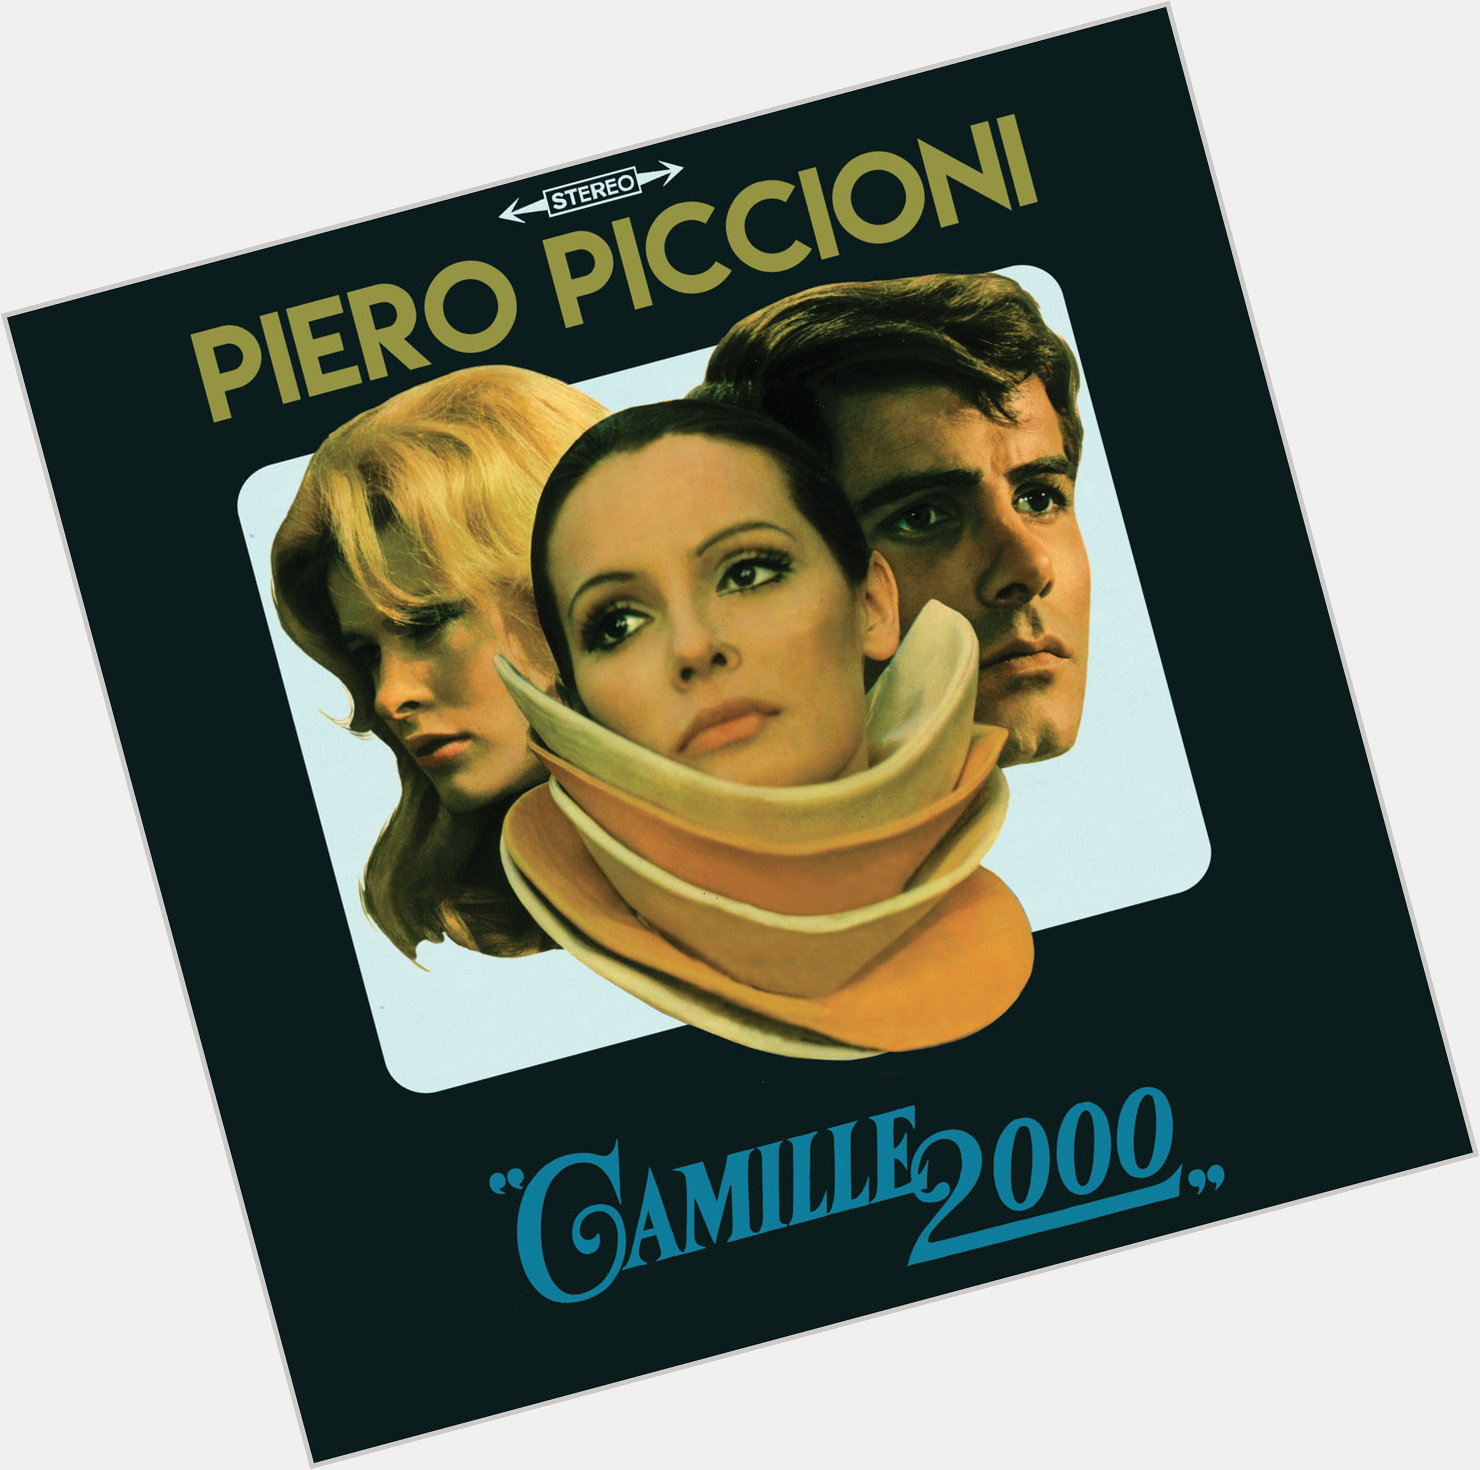 Piero Piccioni dating 2.jpg